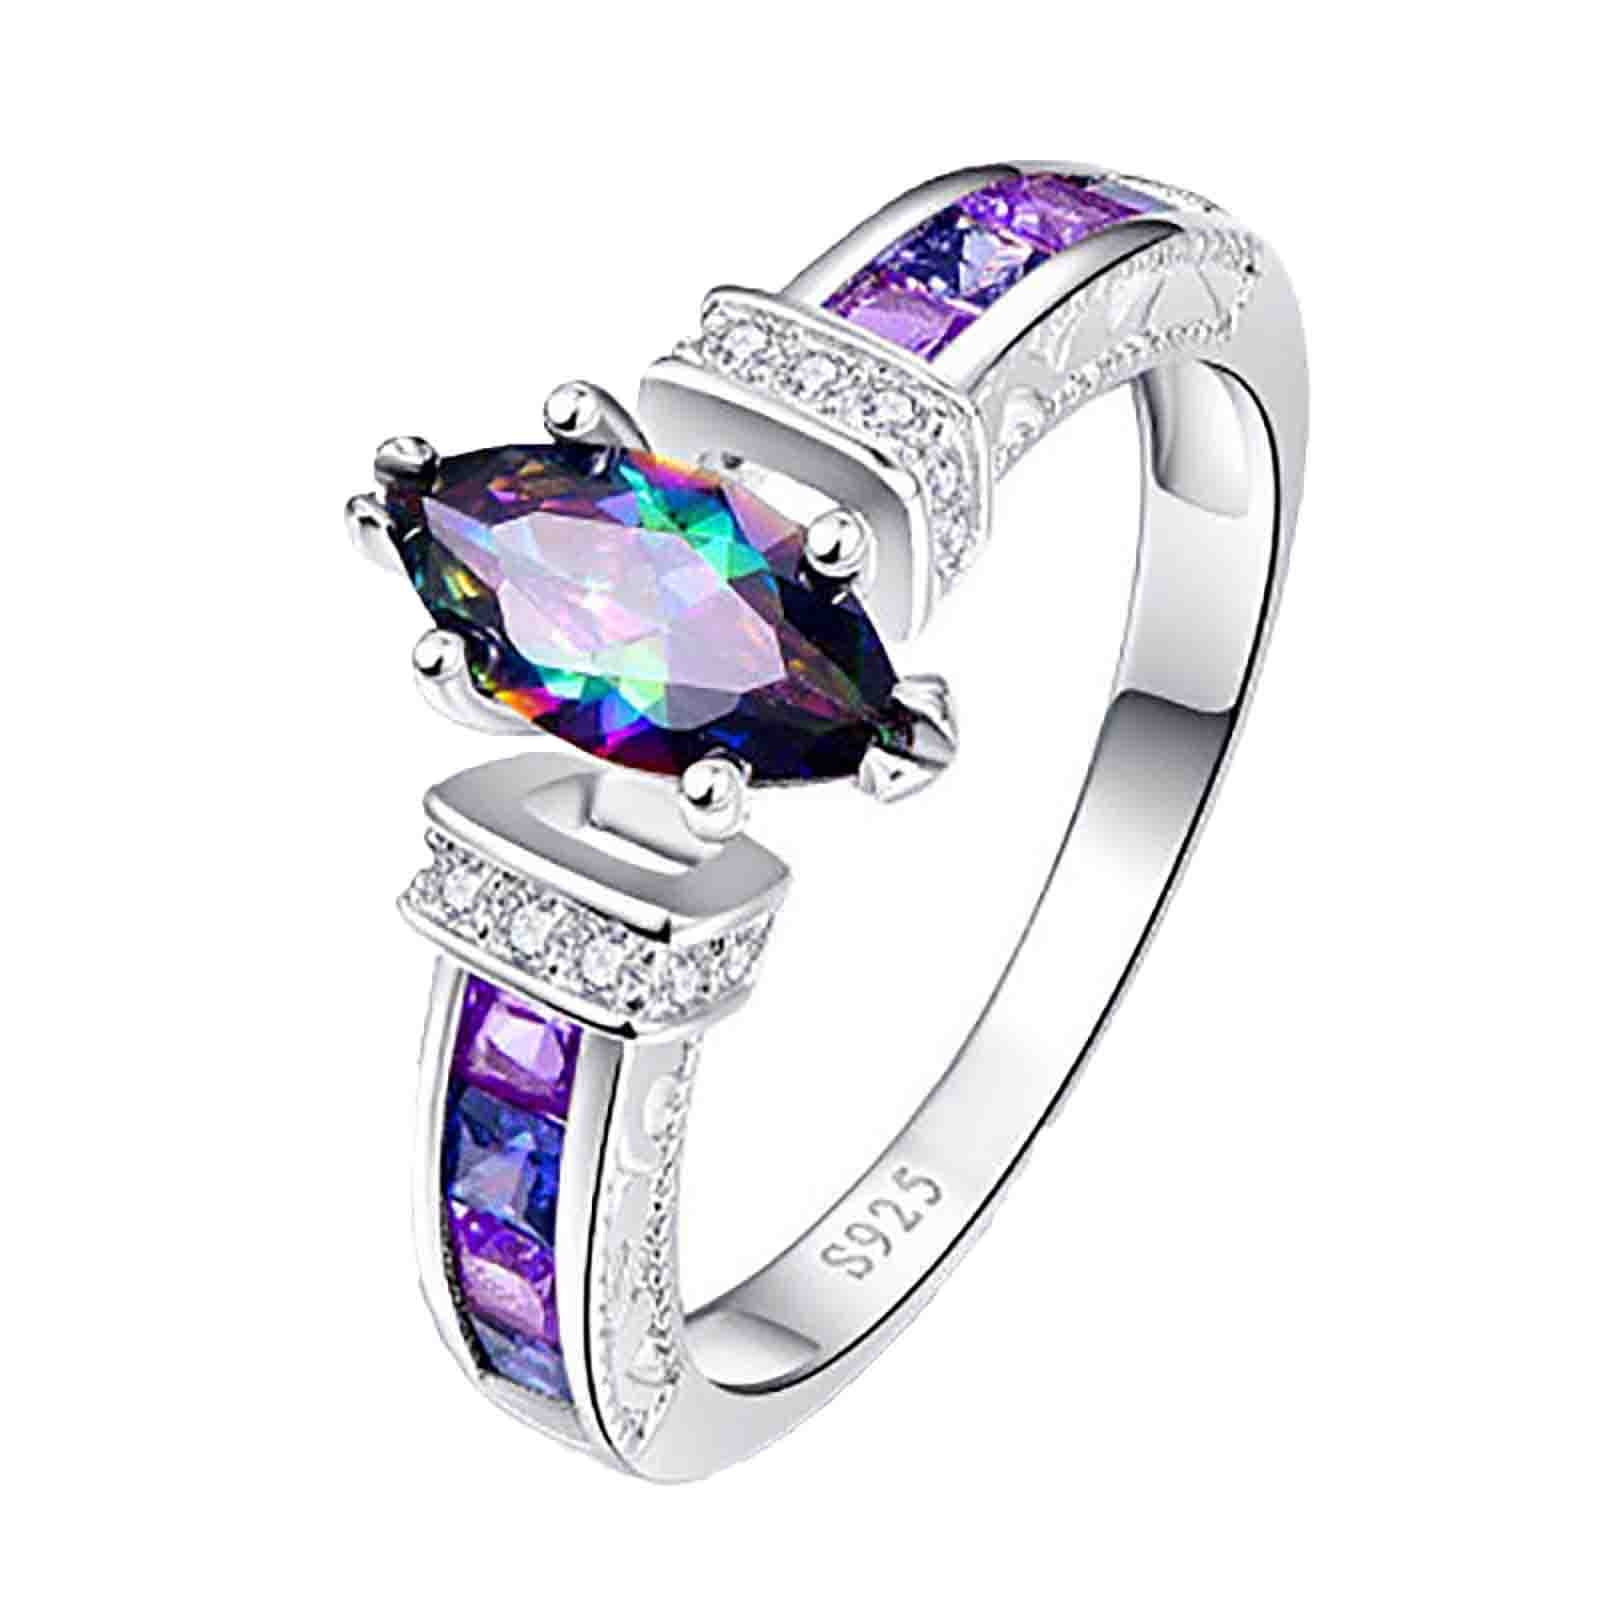 925 Silver Woman Princess Emerald AAA Zircon Gift Ring Wedding Jewelry Size 6-10 